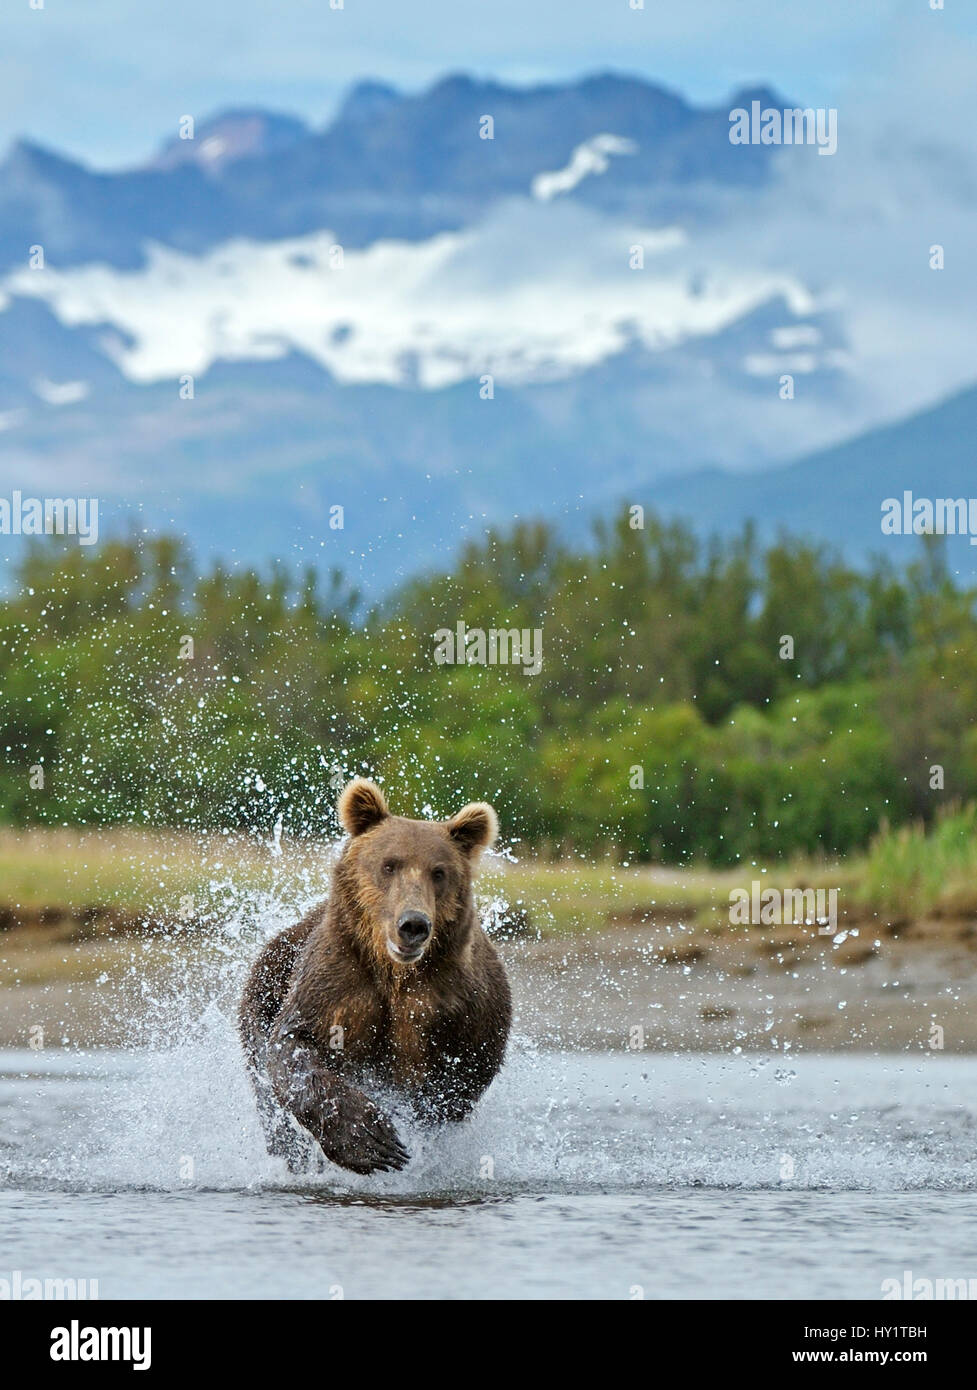 Grizzly bear (Ursus arctos horribilis) leaping through water, chasing salmon. Katmai National Park, Alaska, USA, August. Stock Photo